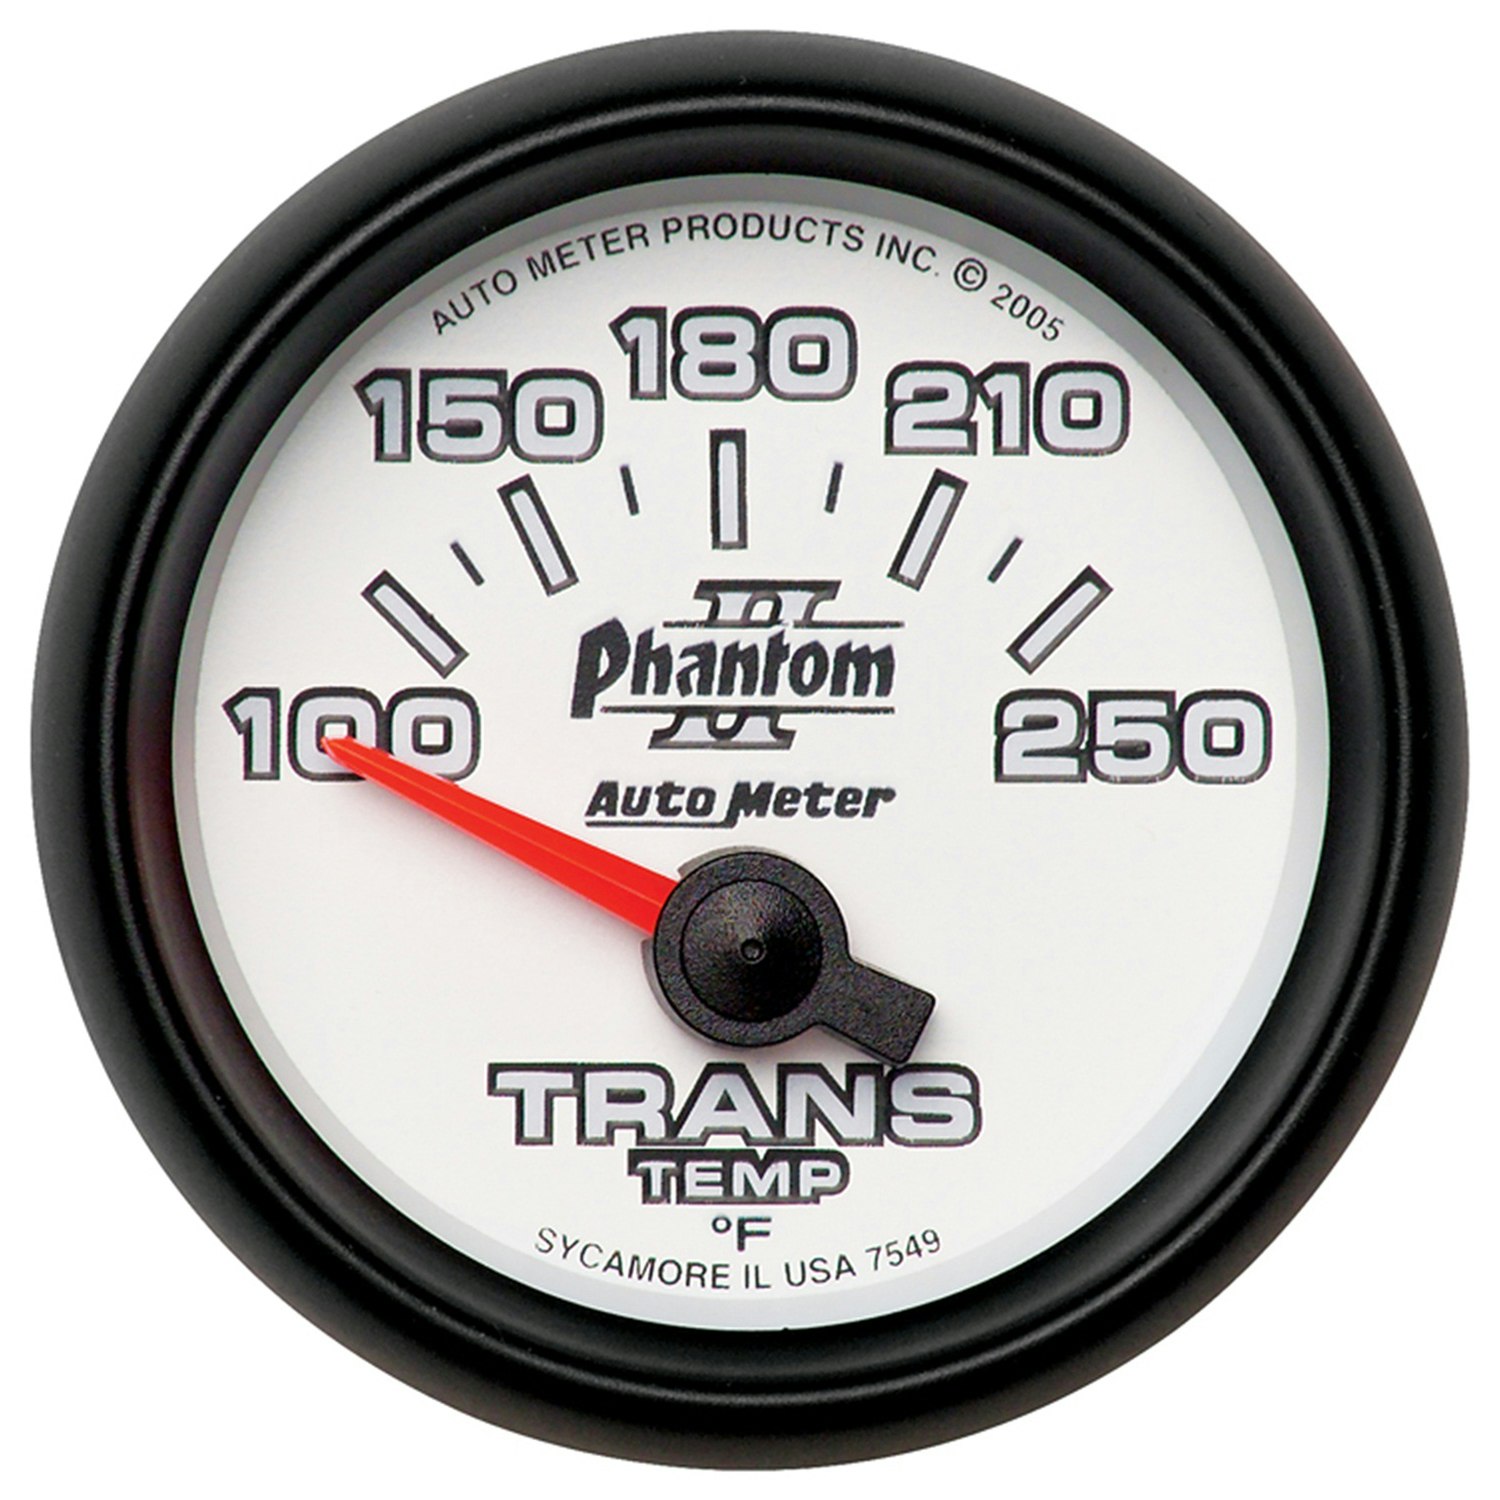 AutoMeter 7549 Phantom II Electric Gauge for Transmission Temperature 